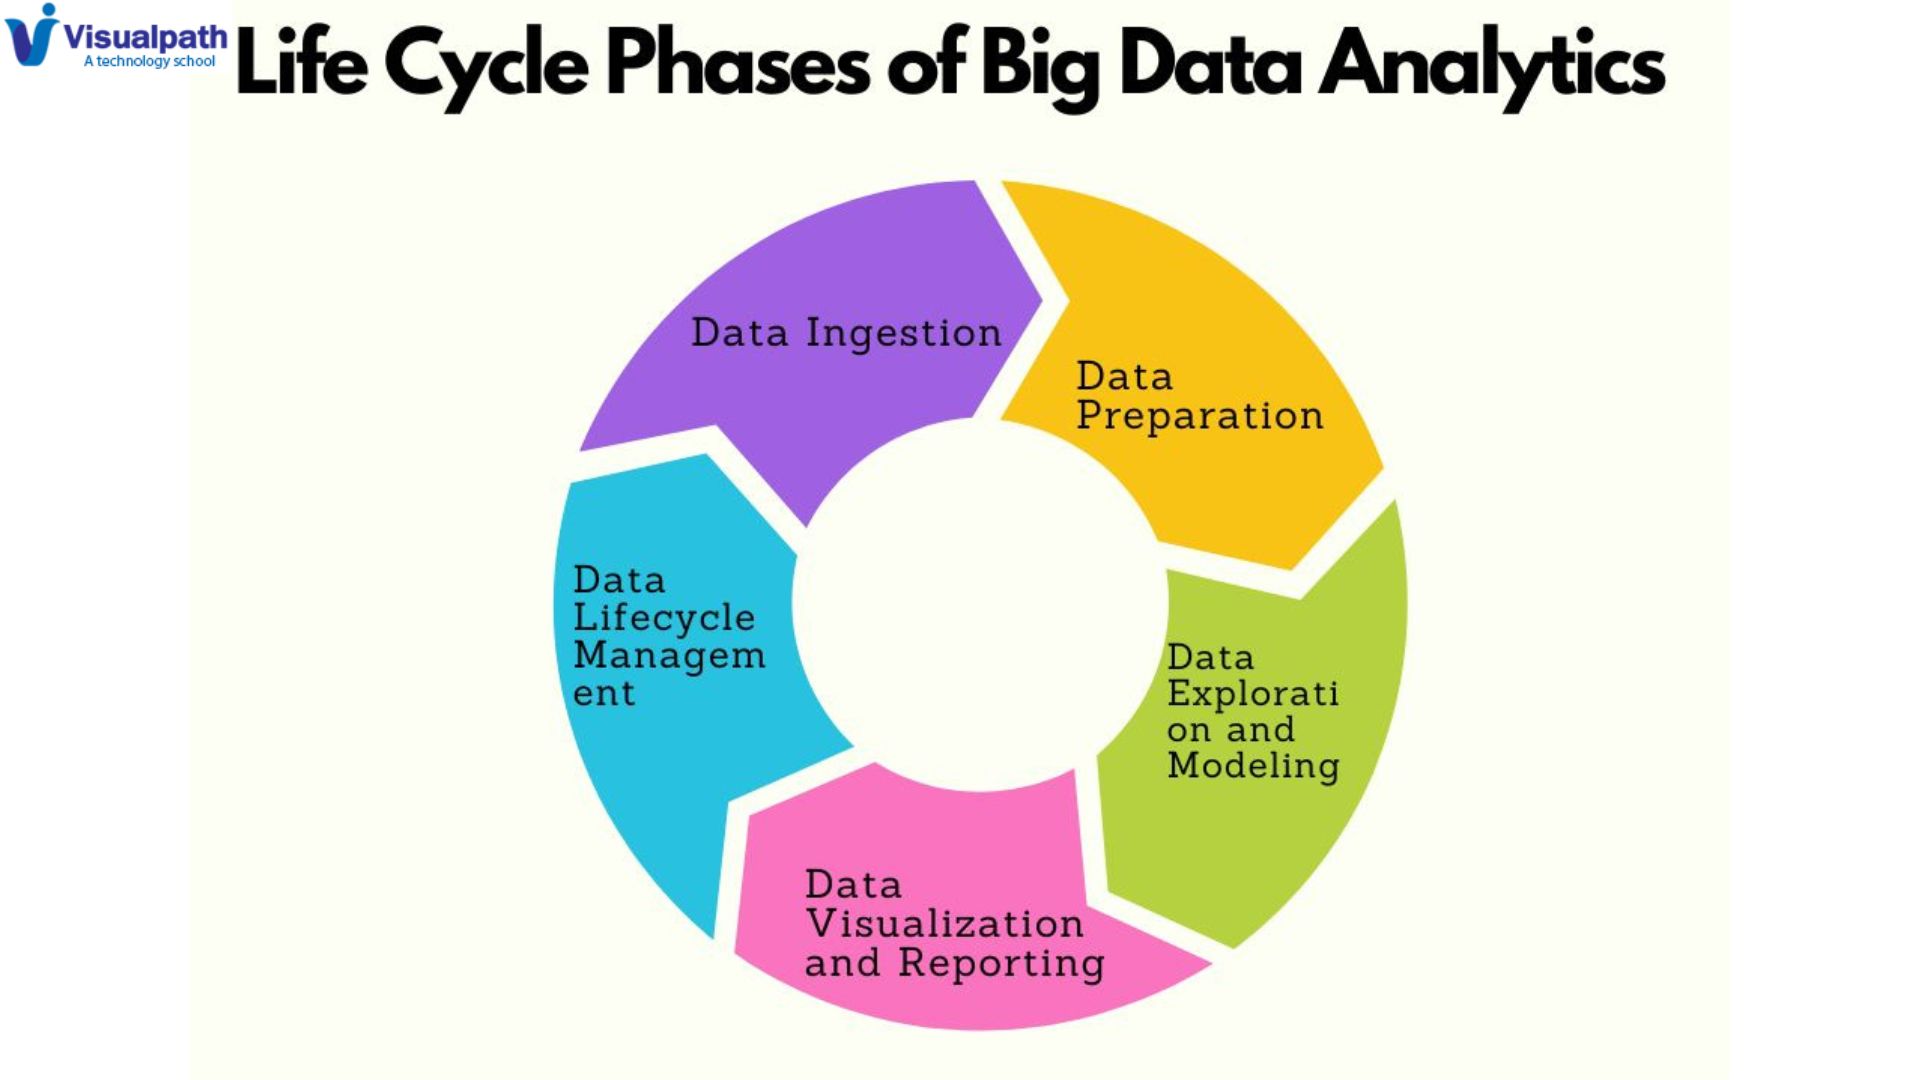 Data Analytics Online Training in India